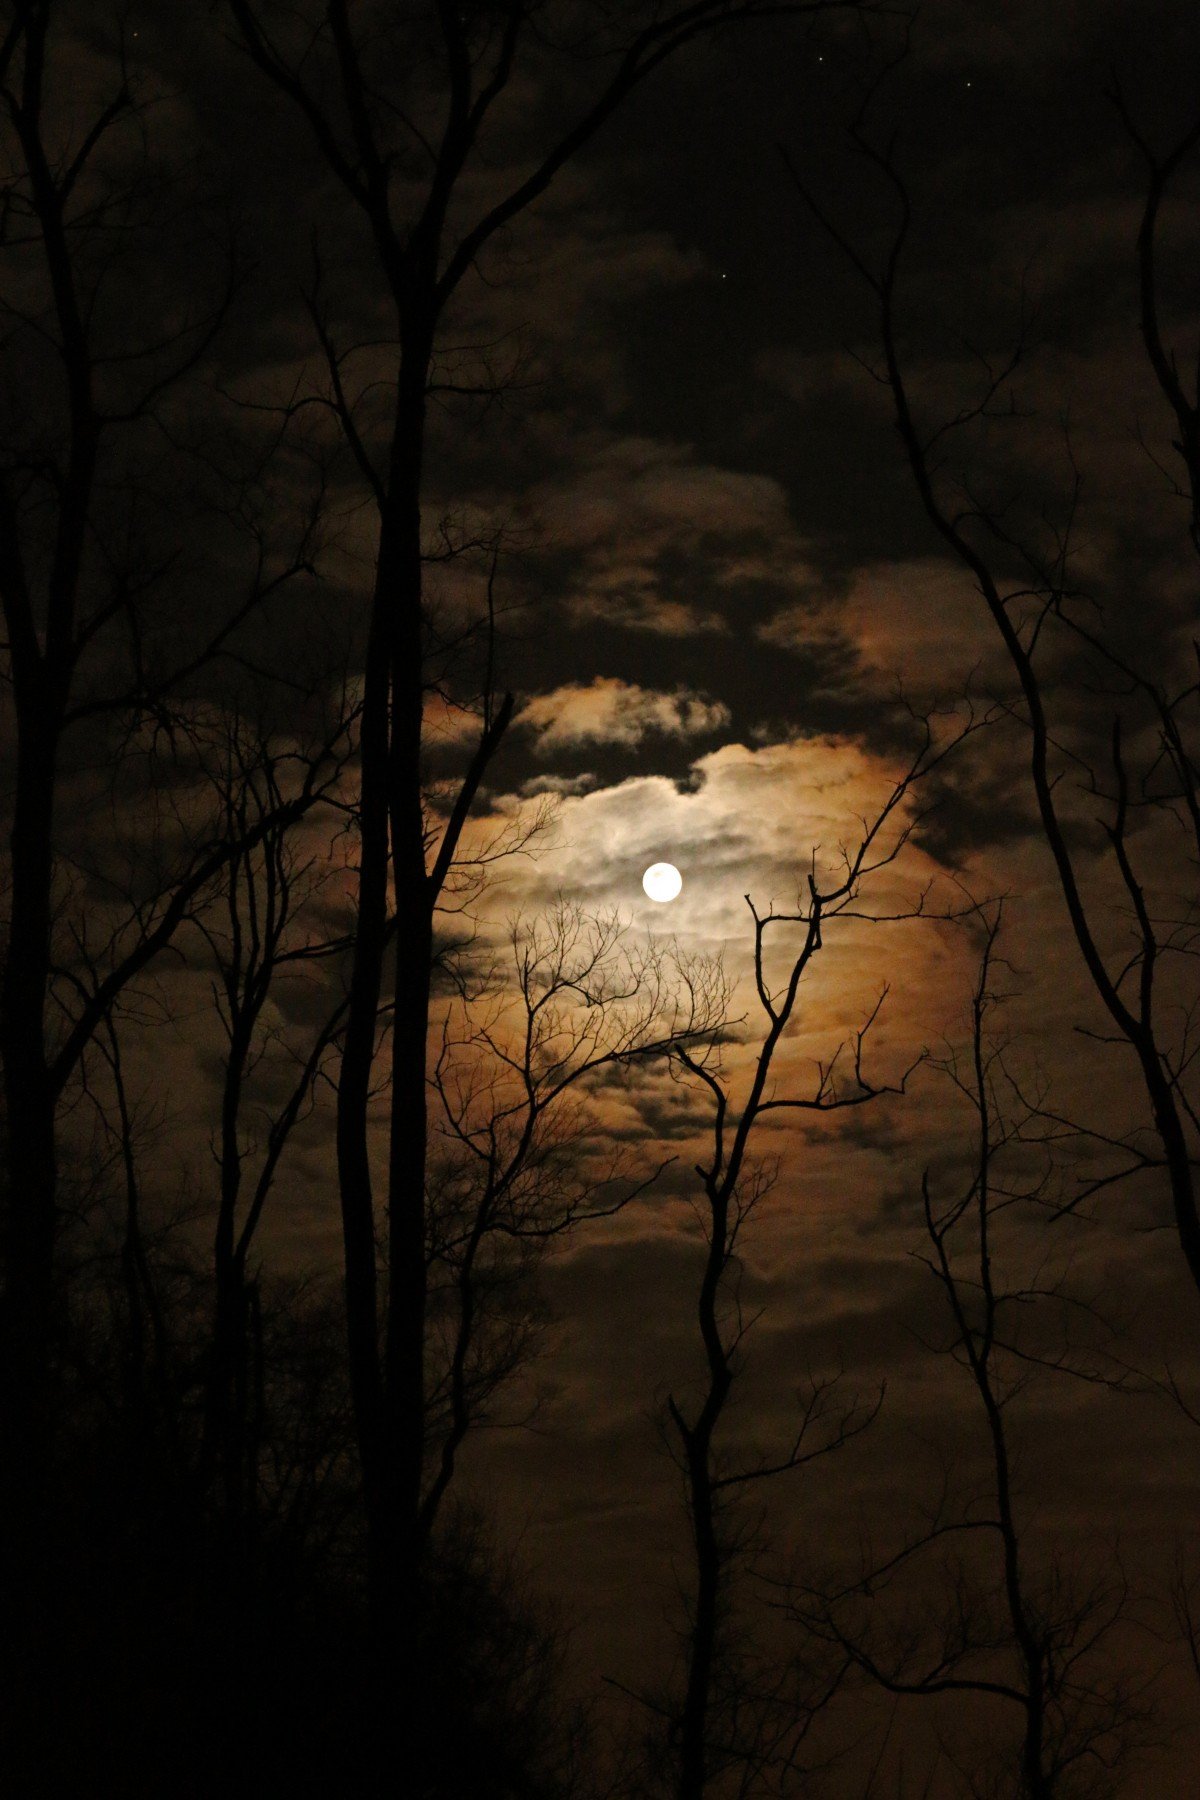 Samhain Pagan sabbath full_moon_dark_spooky_sky_clouds_moon_night_full.jpeg